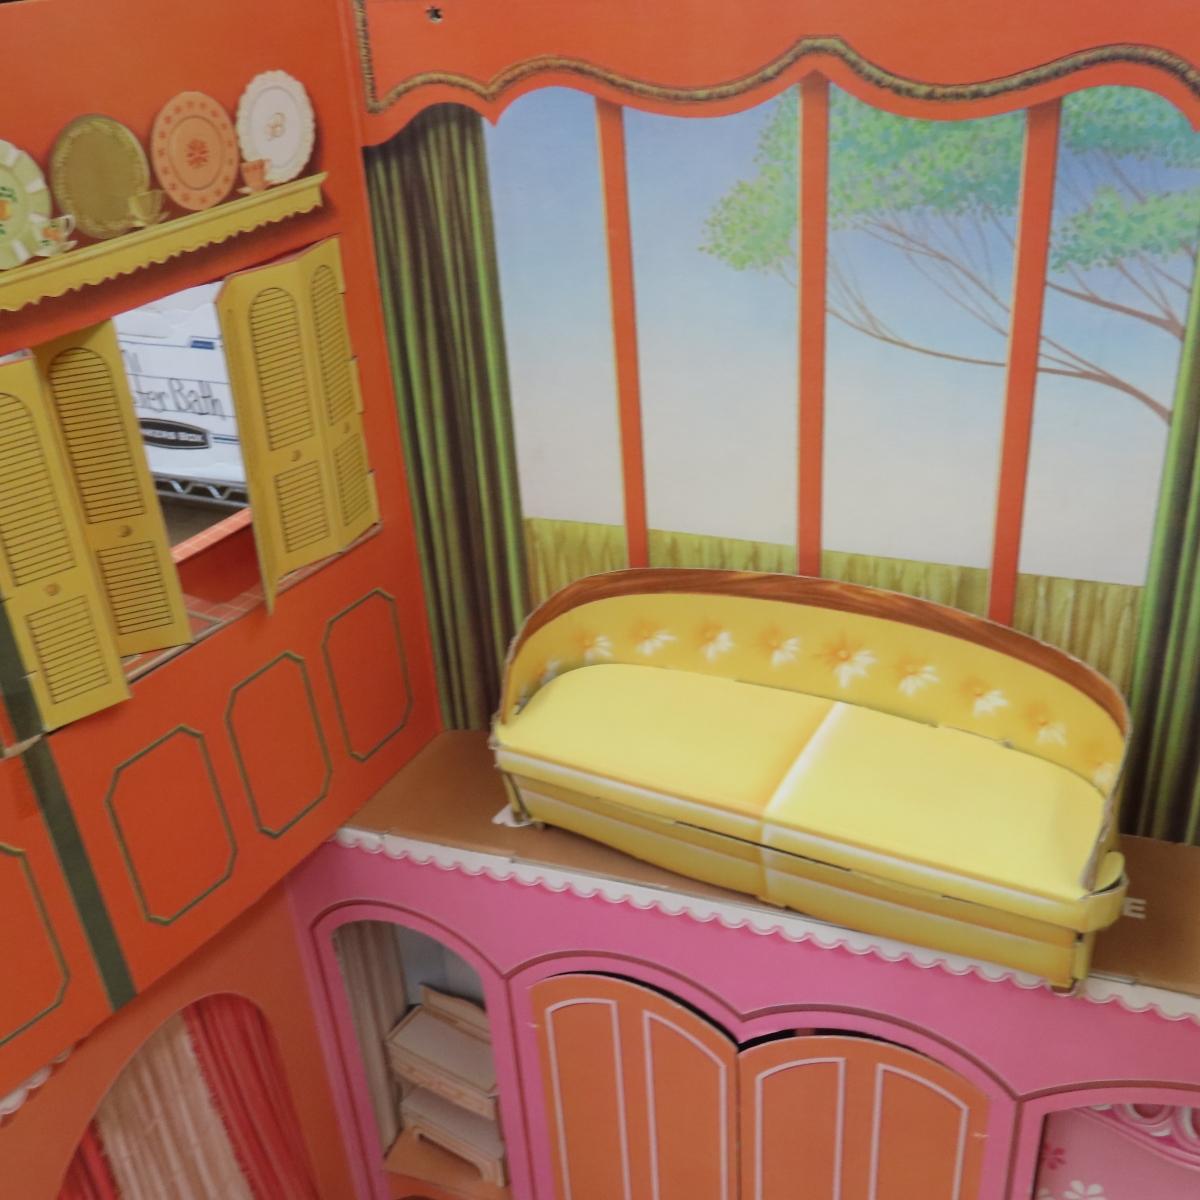 Vintage Barbie Dream House as Shown